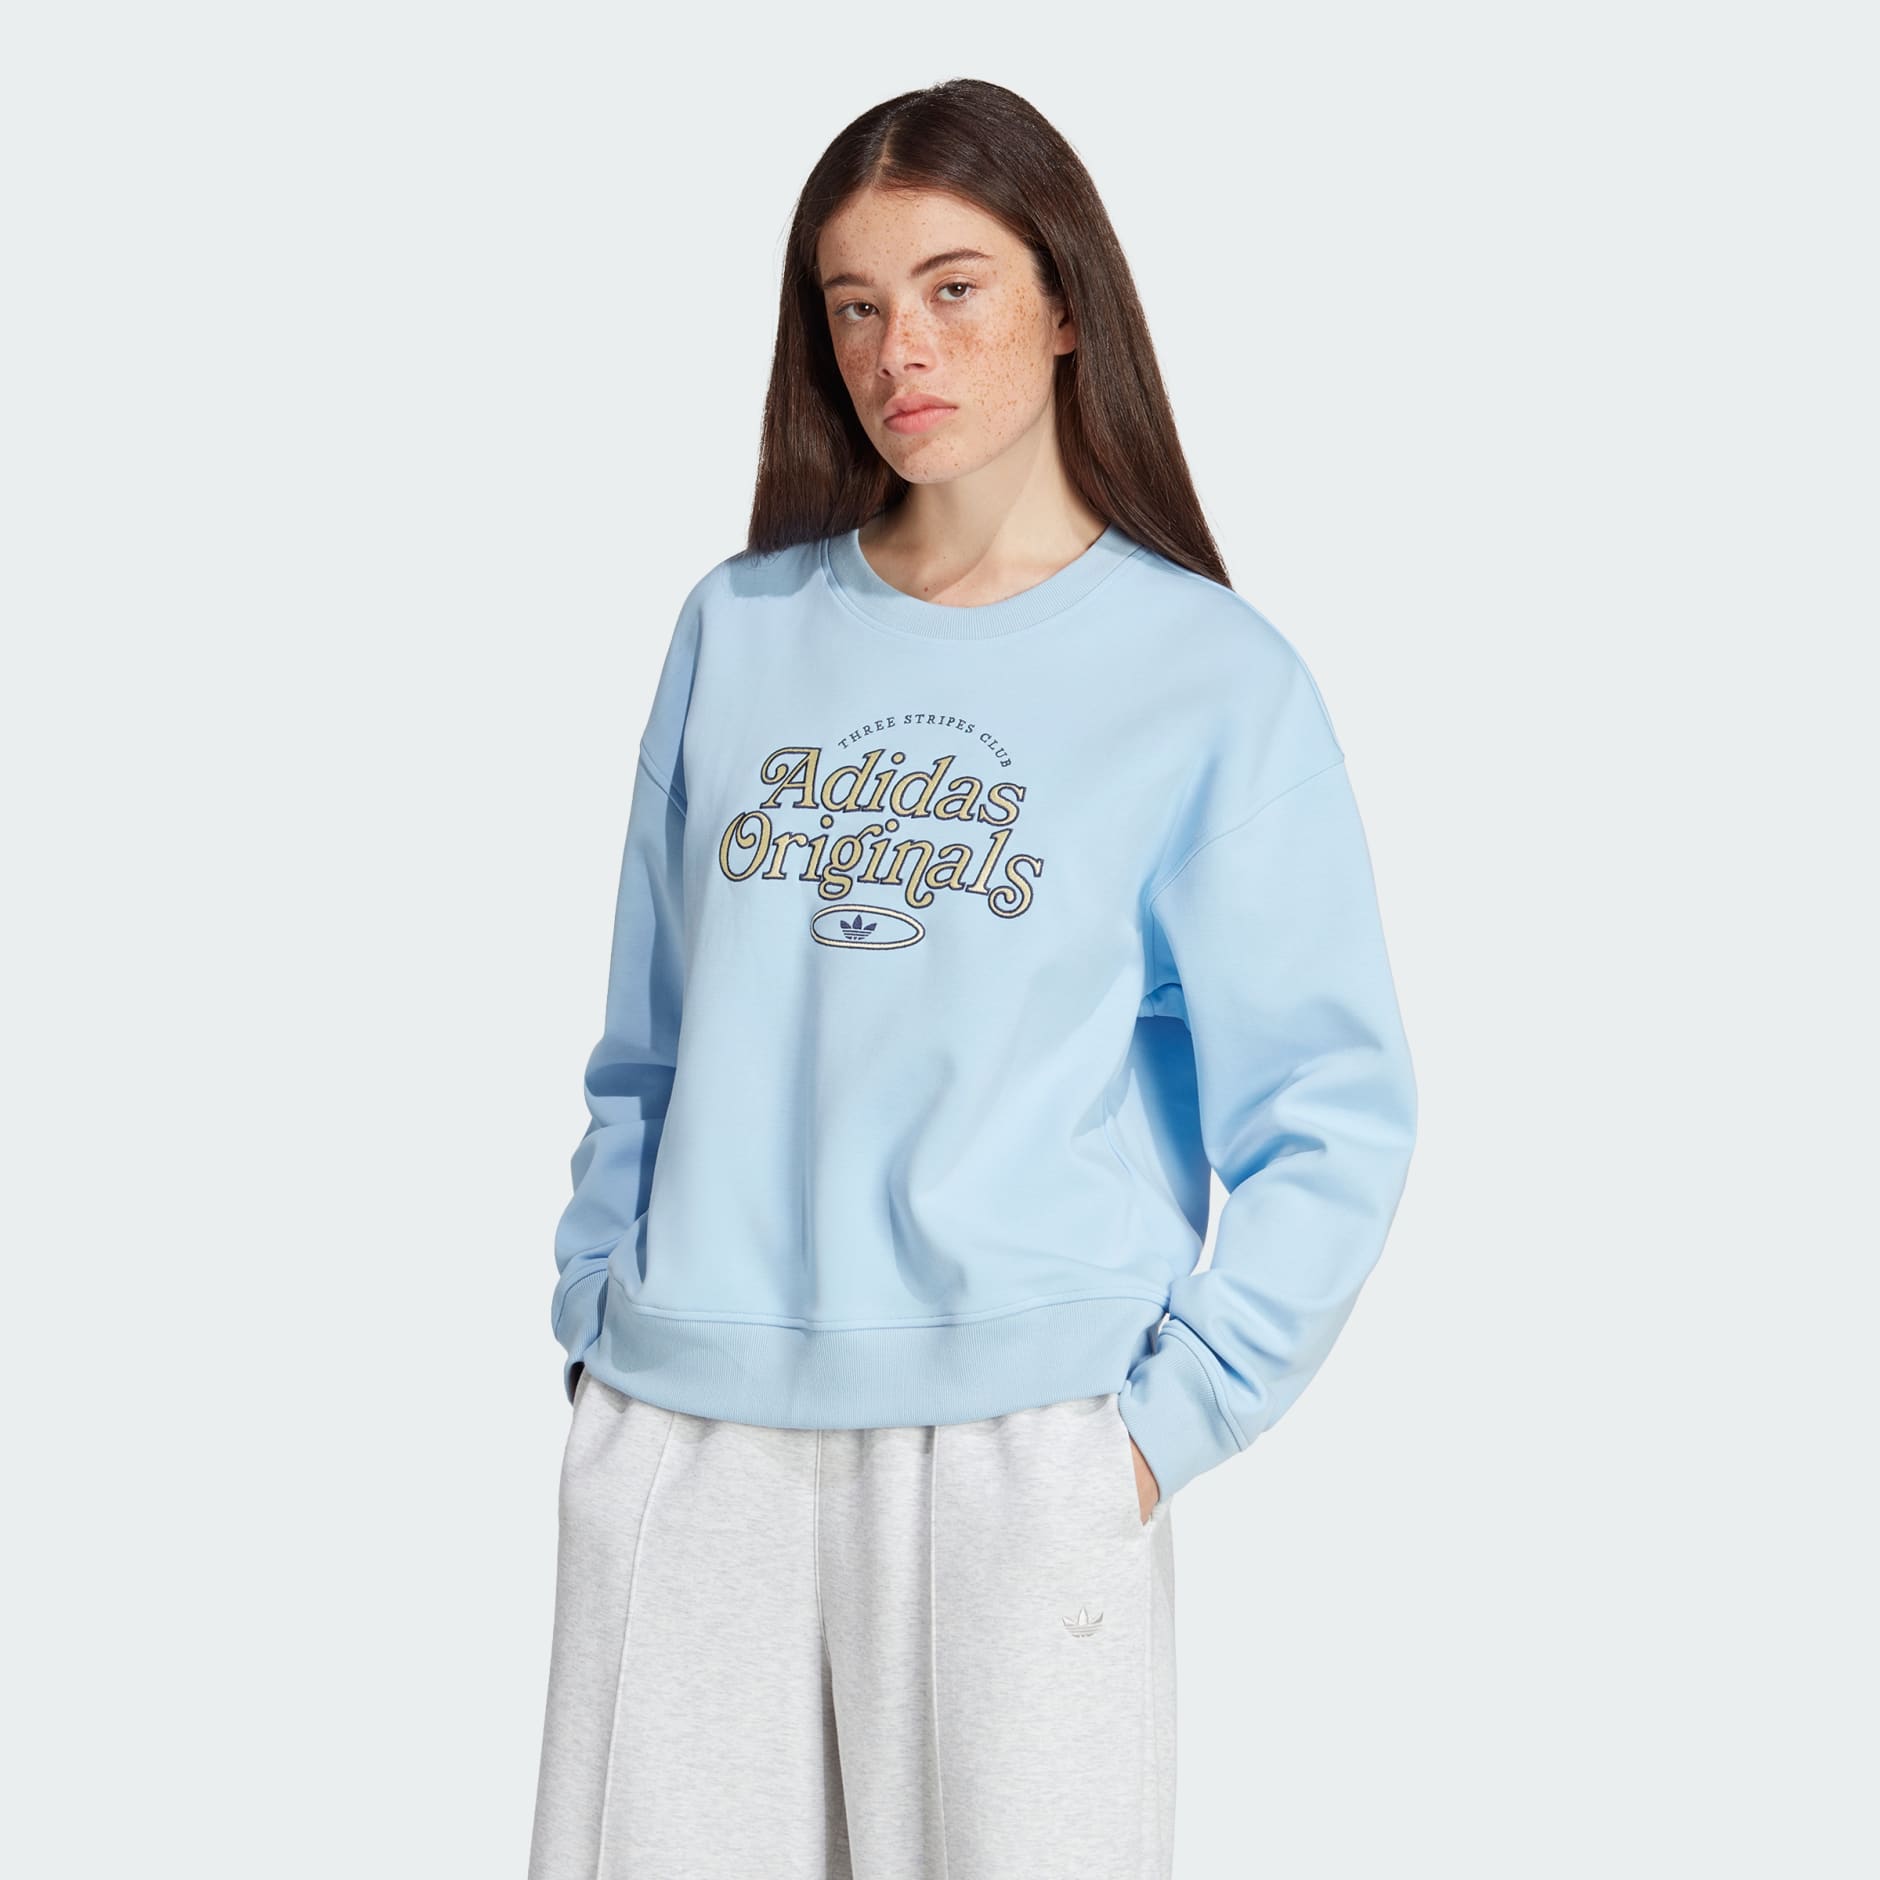 Women's Clothing - Graphics Sweatshirt - Blue